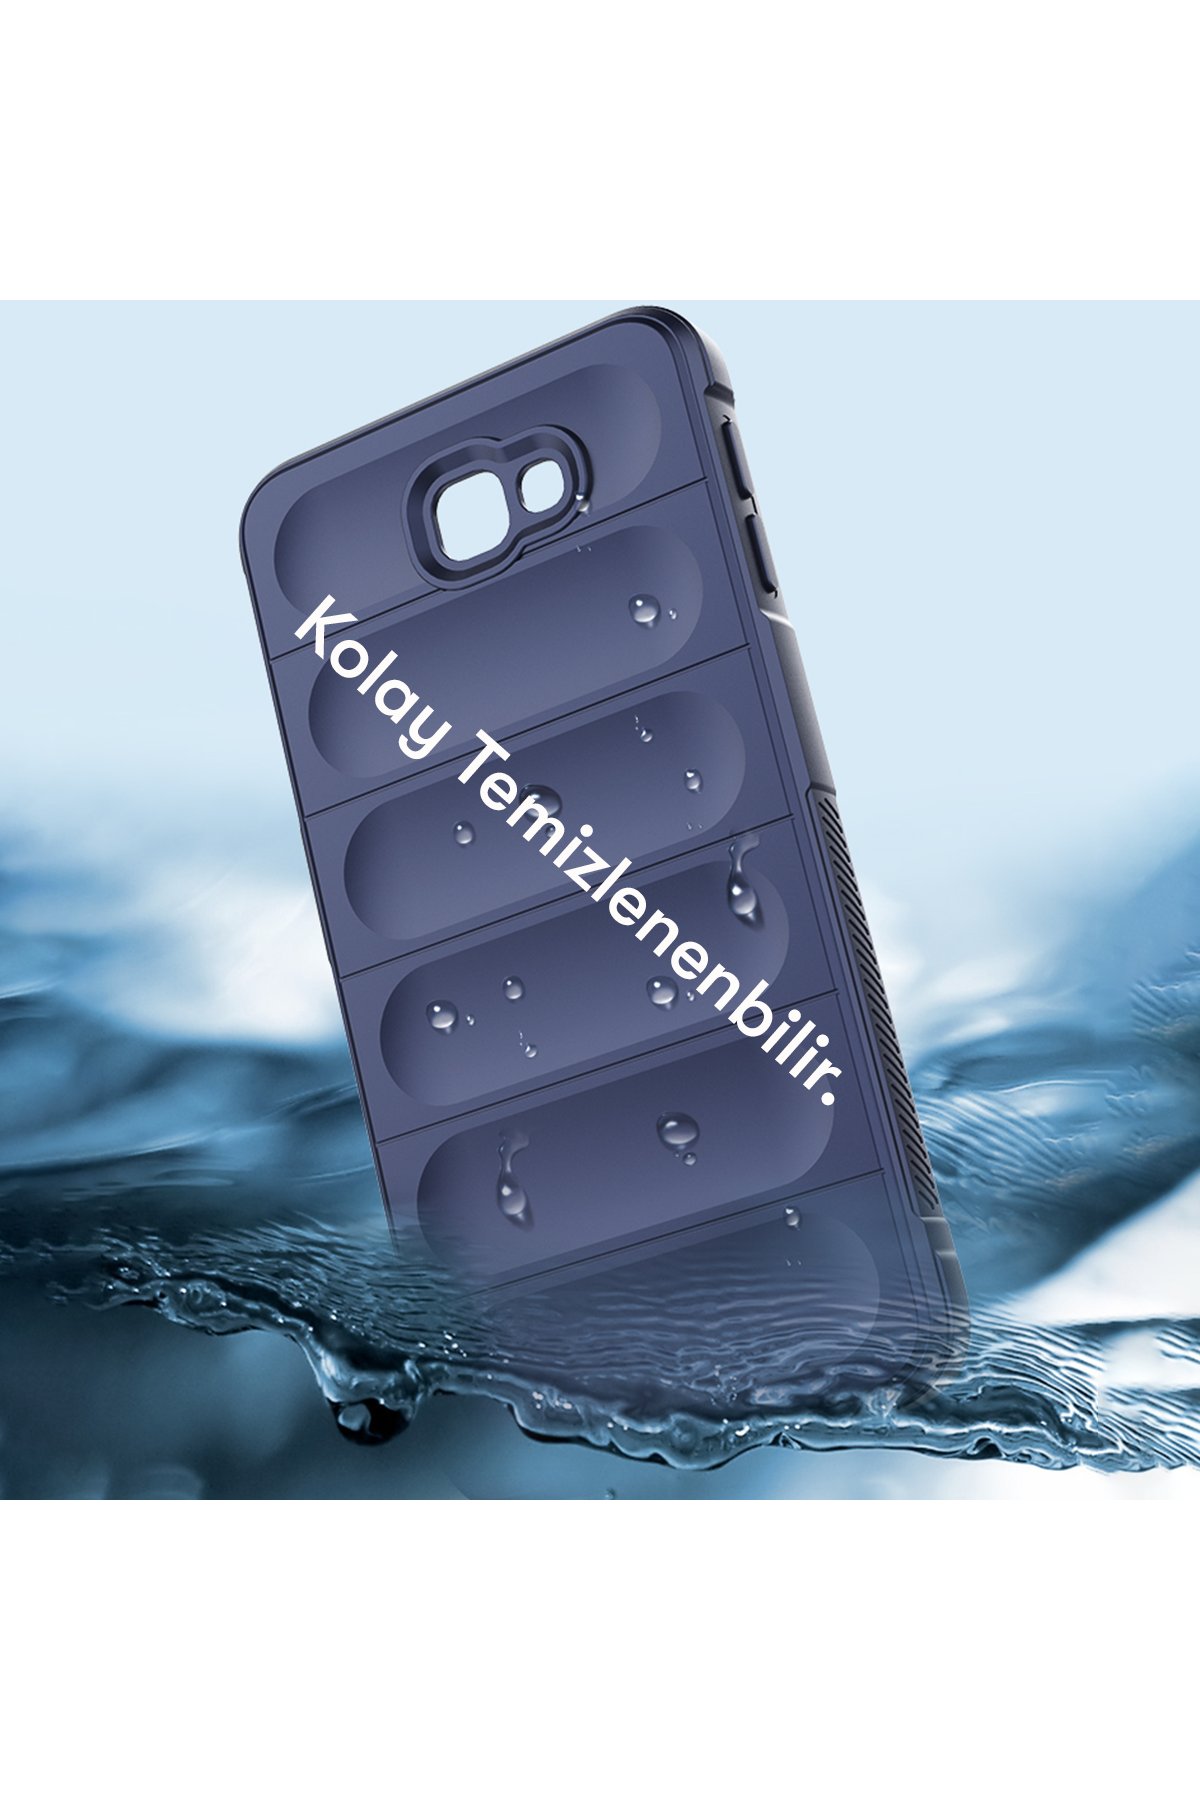 Newface Samsung Galaxy J7 Prime Kılıf Platin Silikon - Mavi